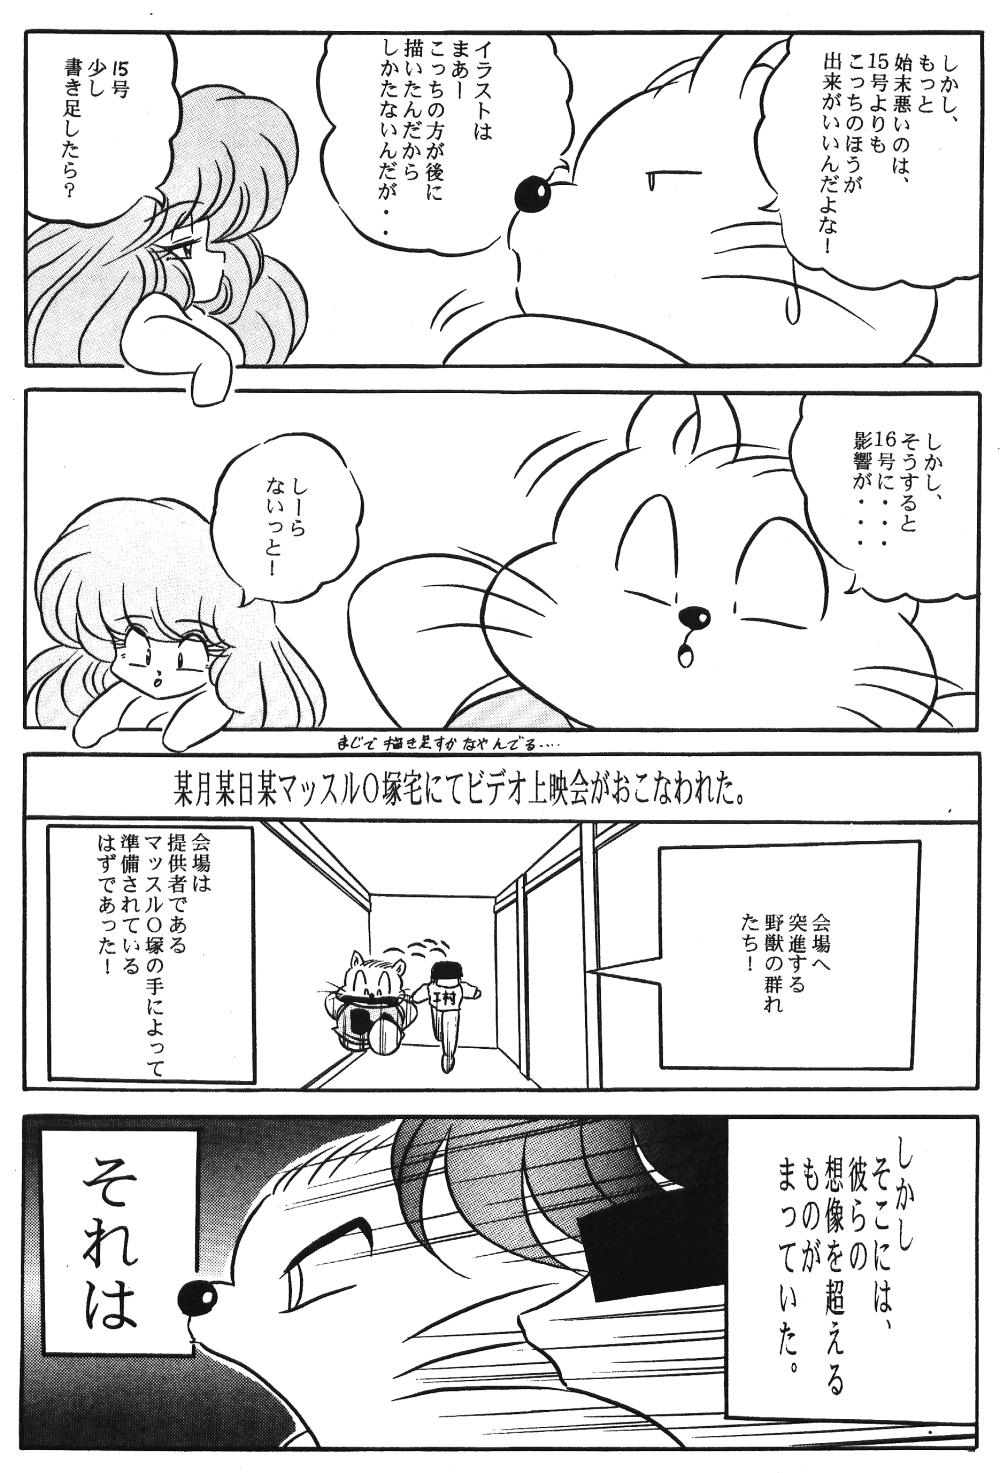 Puba Puchiguma Butsuku 2 - Ranma 12 Cuckolding - Page 6